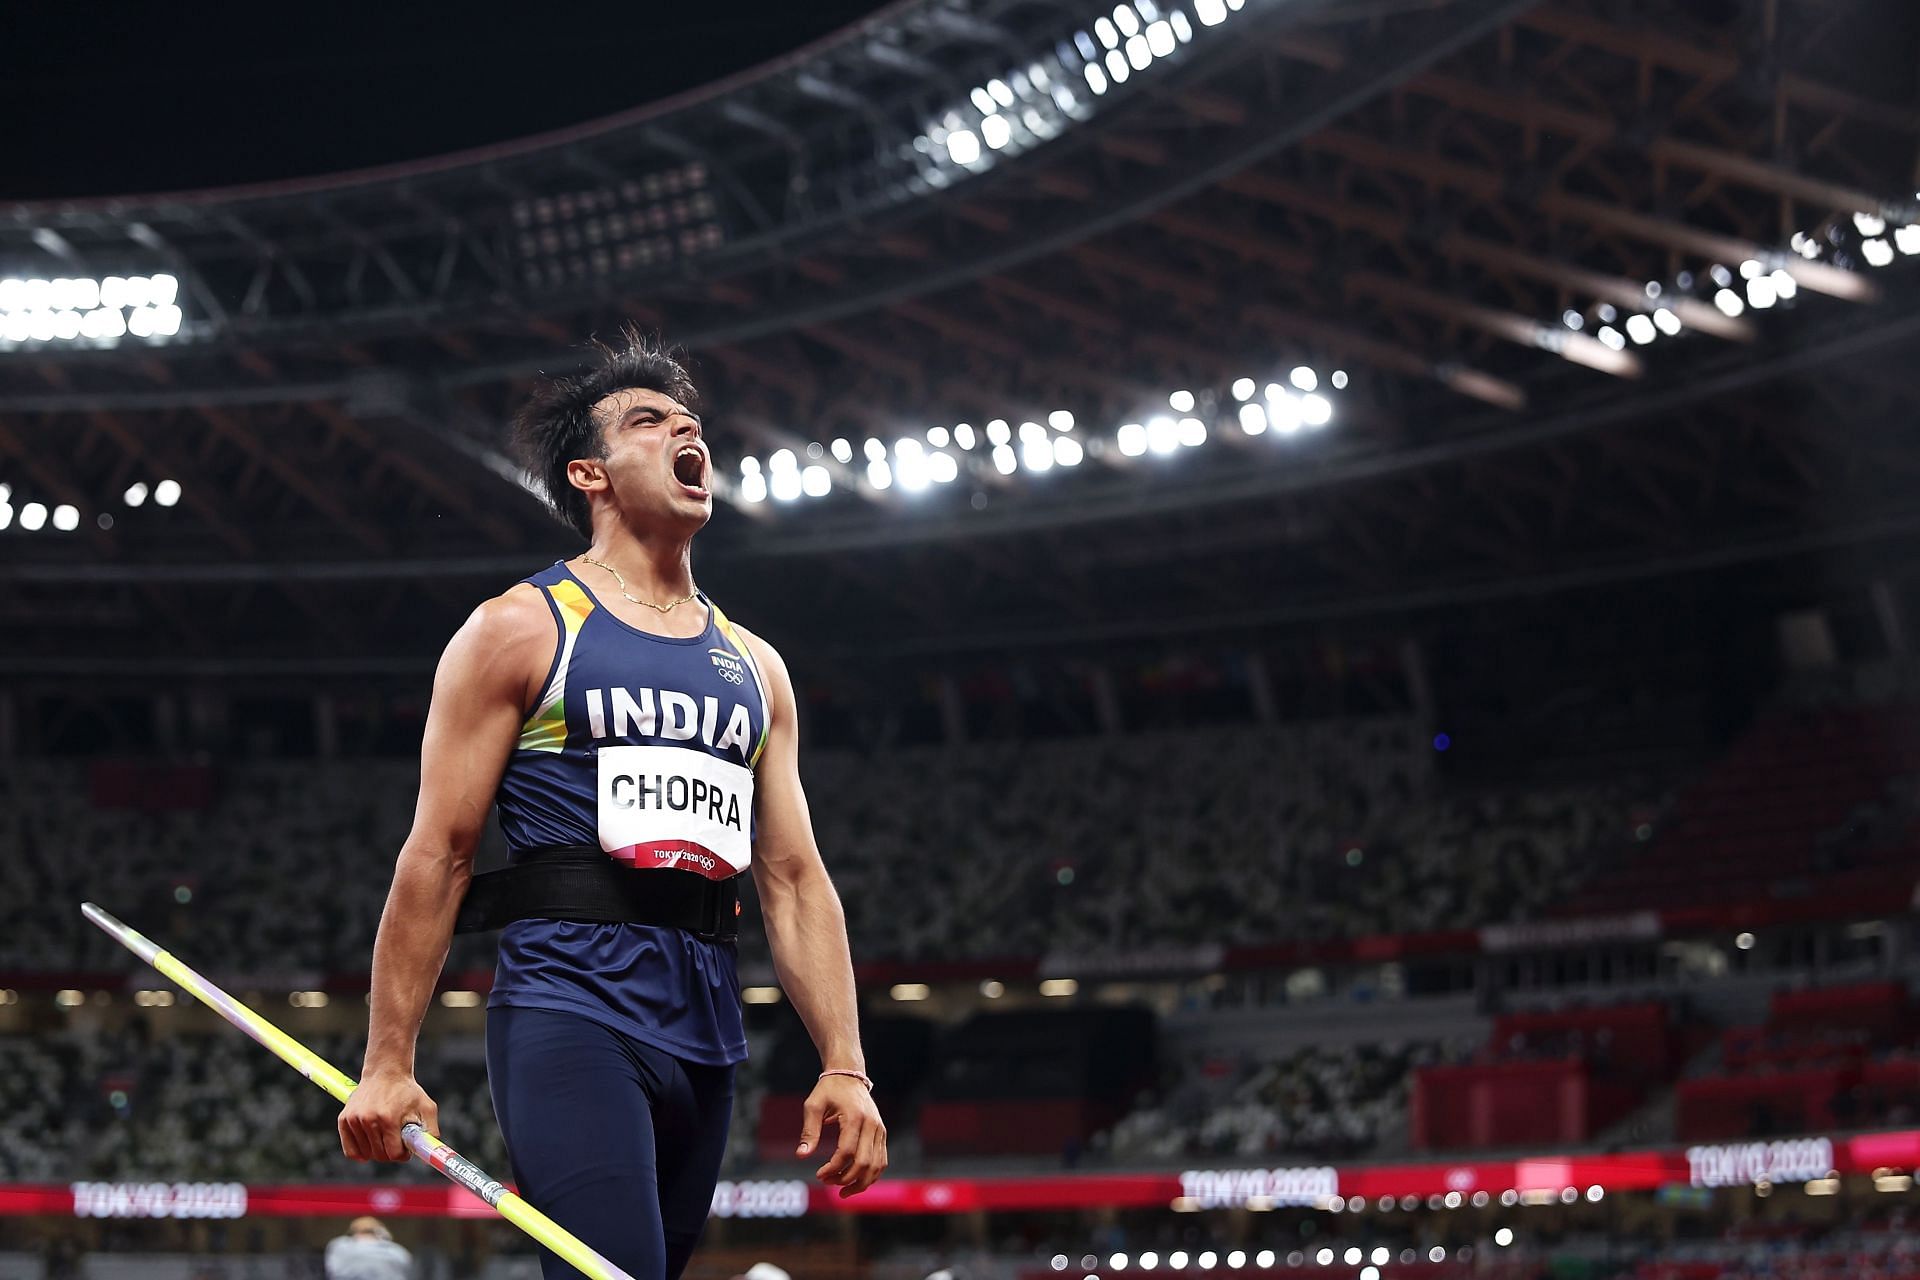 Athletics - Olympics: Neeraj Chopra